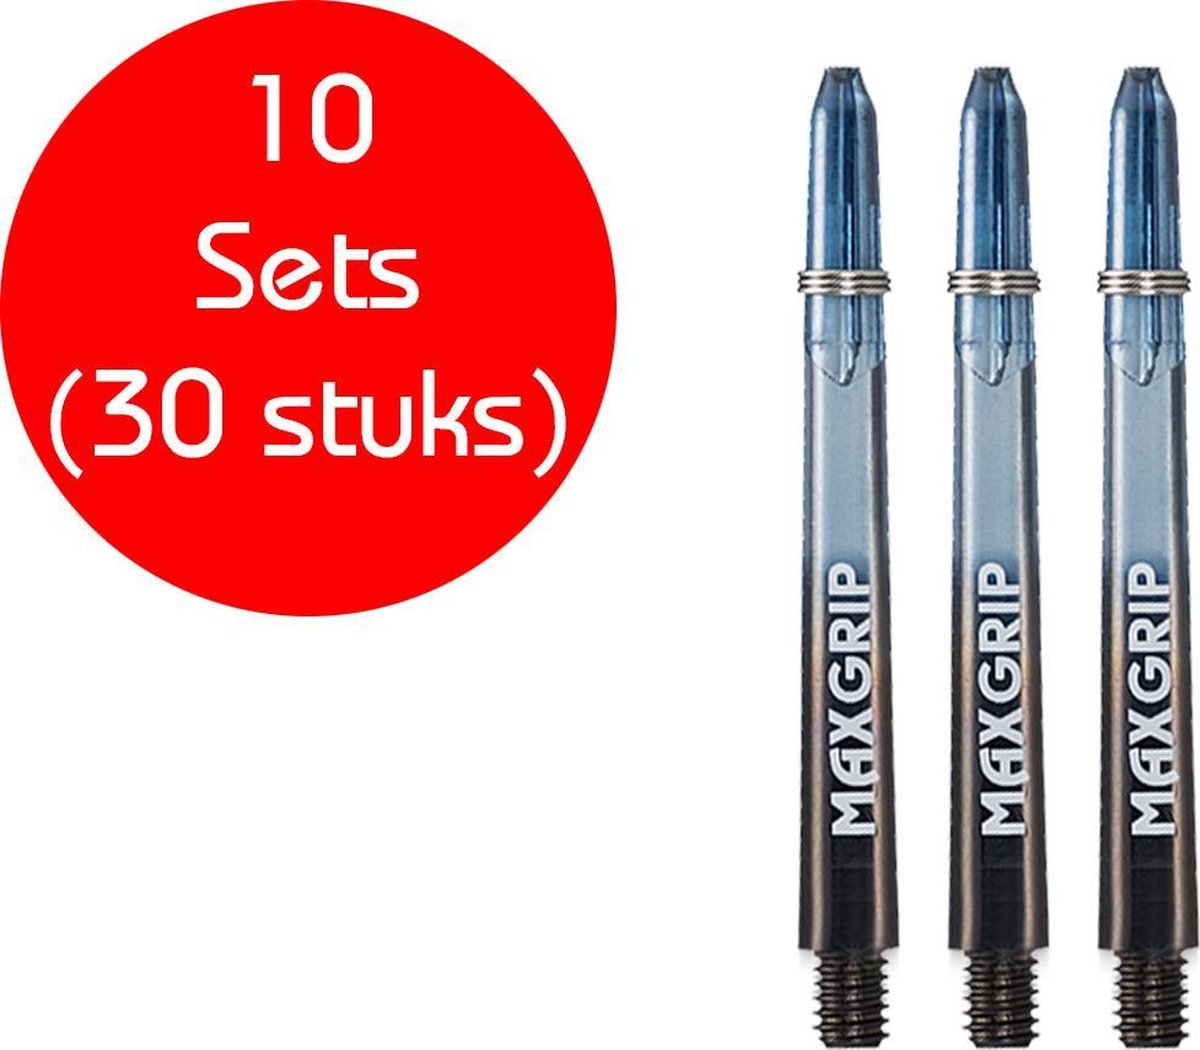 Dragon darts - Maxgrip - 10 sets (30 stuks) - dart shafts - zwart-blauw - darts shafts - medium